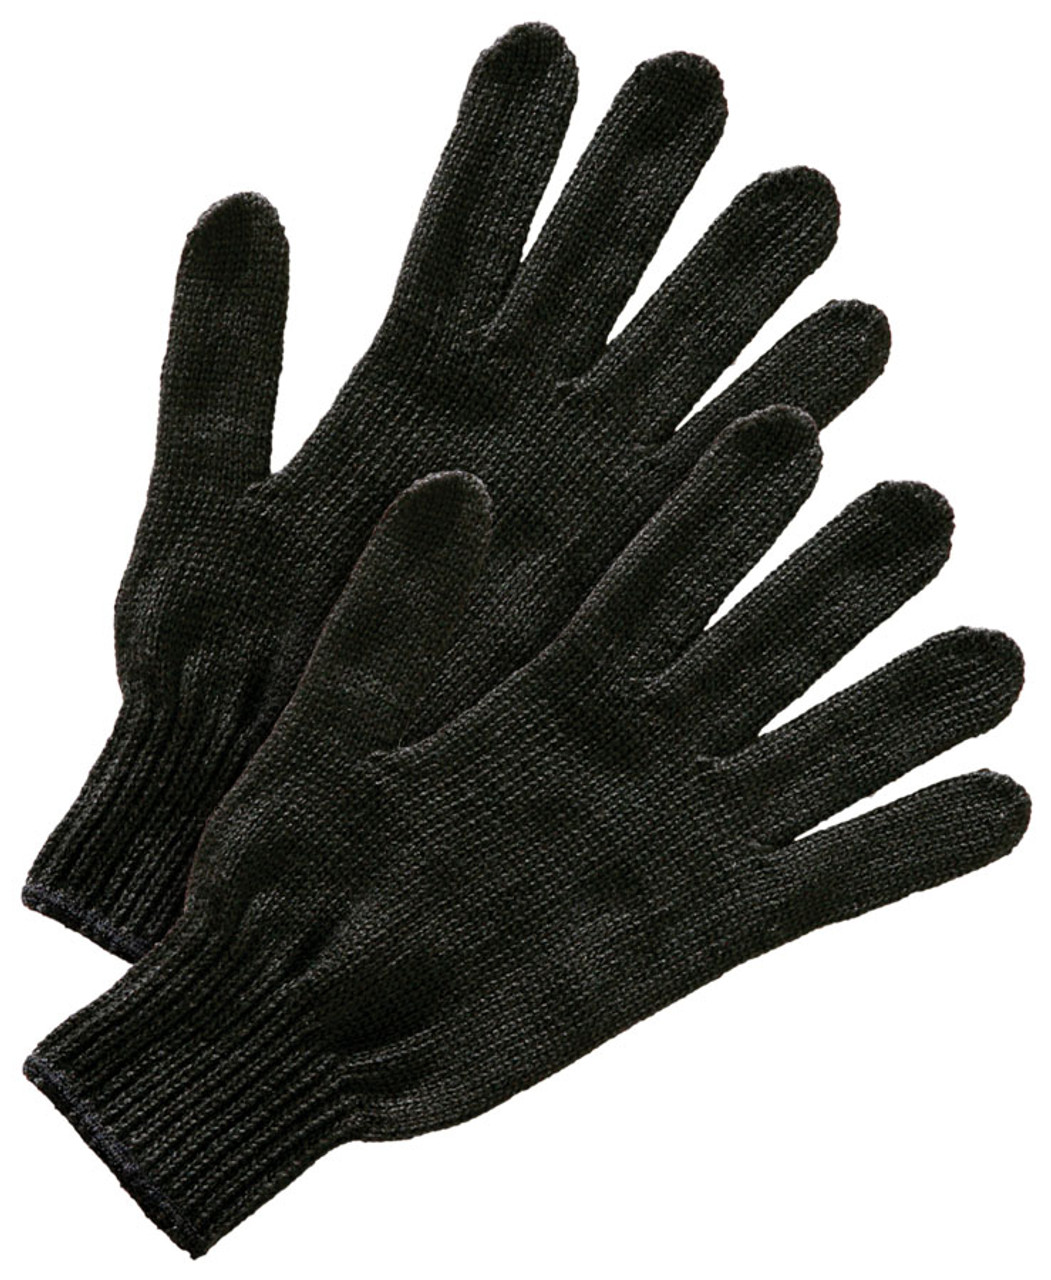 Carbon X® FR Glove Liners  96-1-9080-9